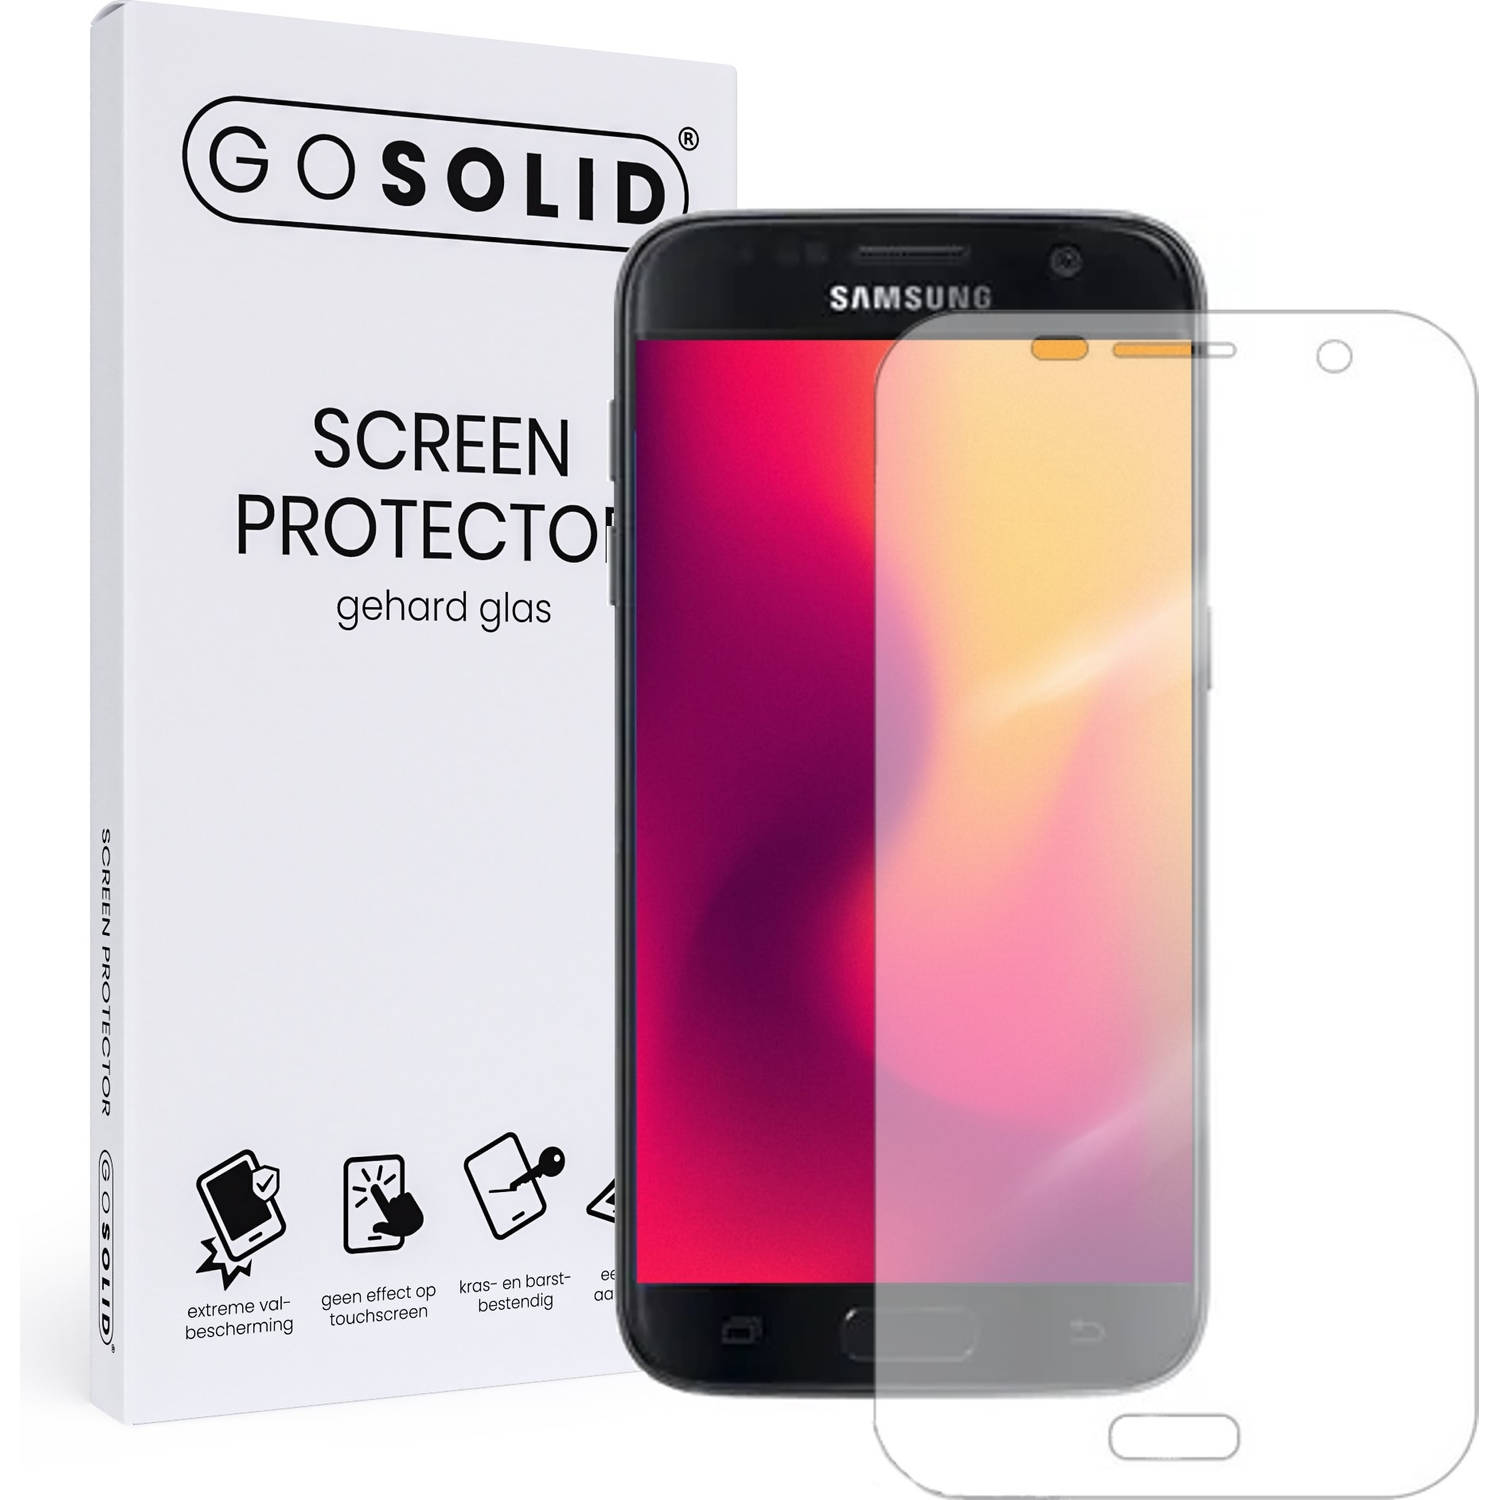 Go Solid! Screenprotector Voor Samsung Galaxy S6 Edge